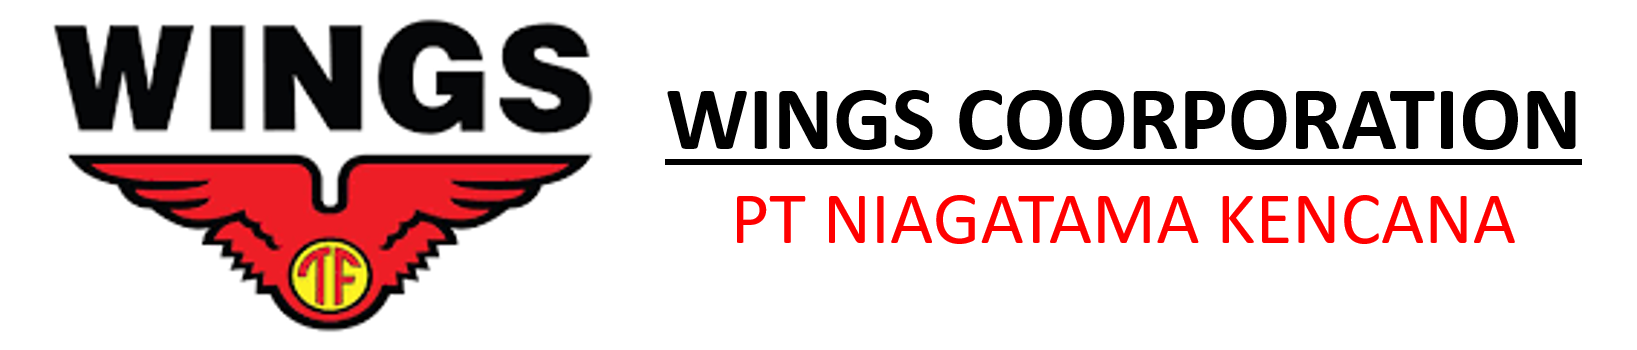 WINGS-NIAGATAMA-KENCANA.png